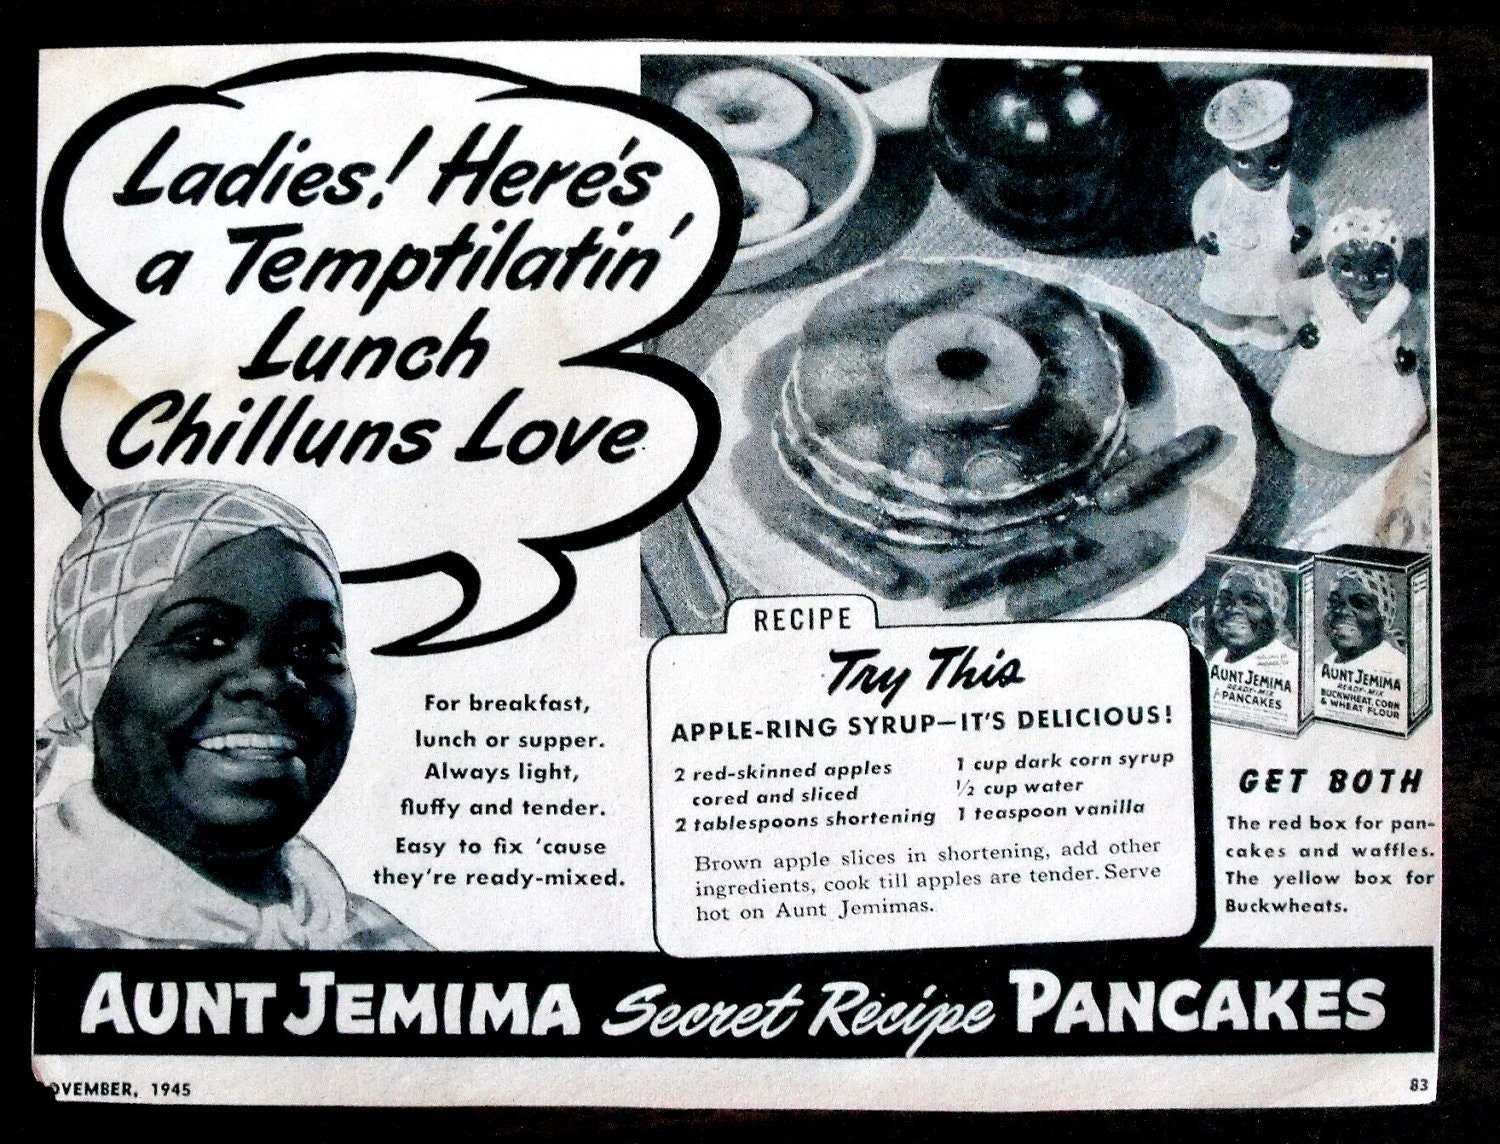 Aunt Jemima Secret Recipe